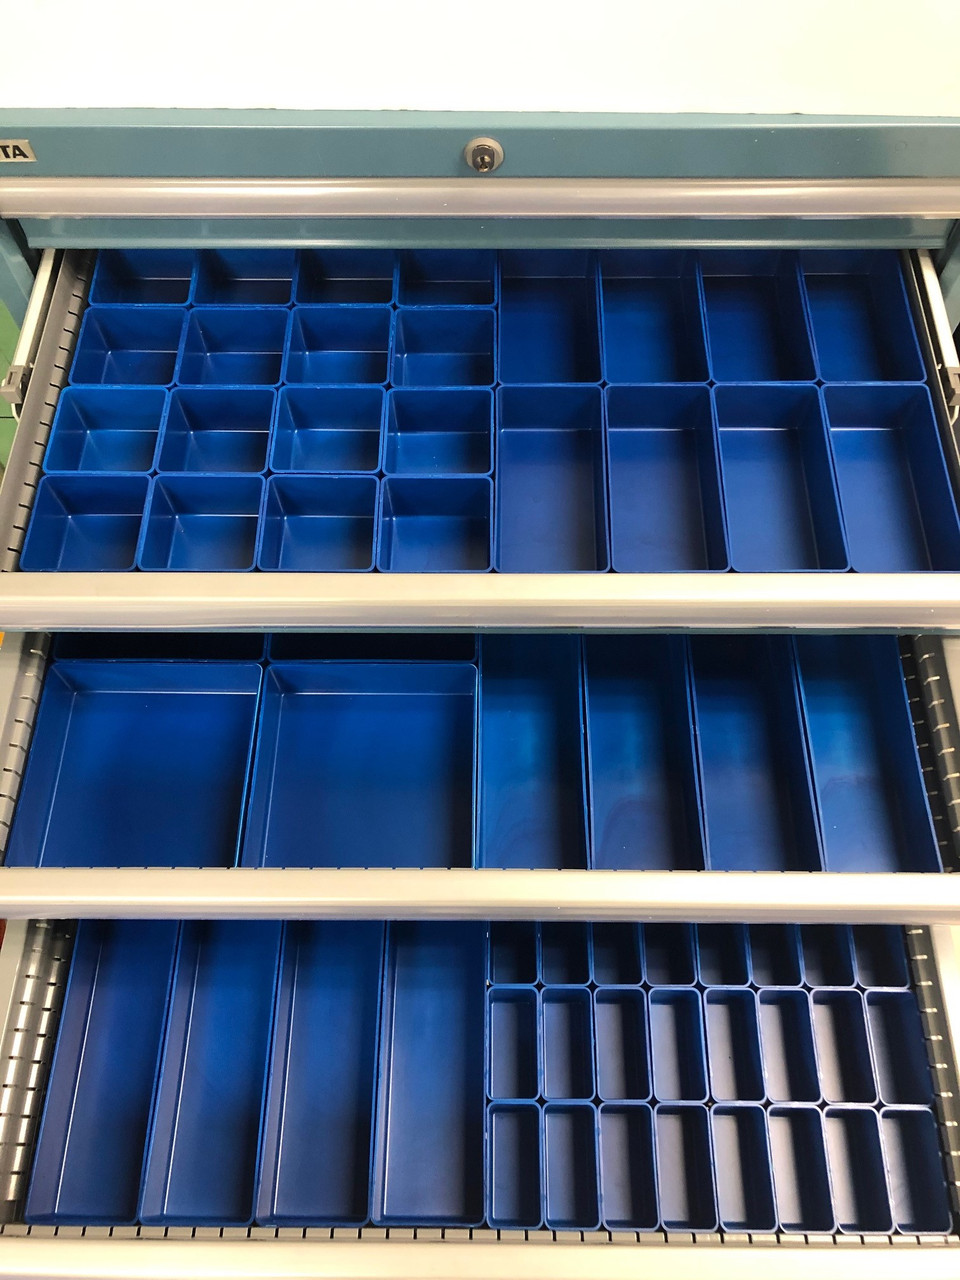 Alvin PB1SBB Photo Storage Box, Bright Blue - 7.75 x 11.25 x 4.5 in.